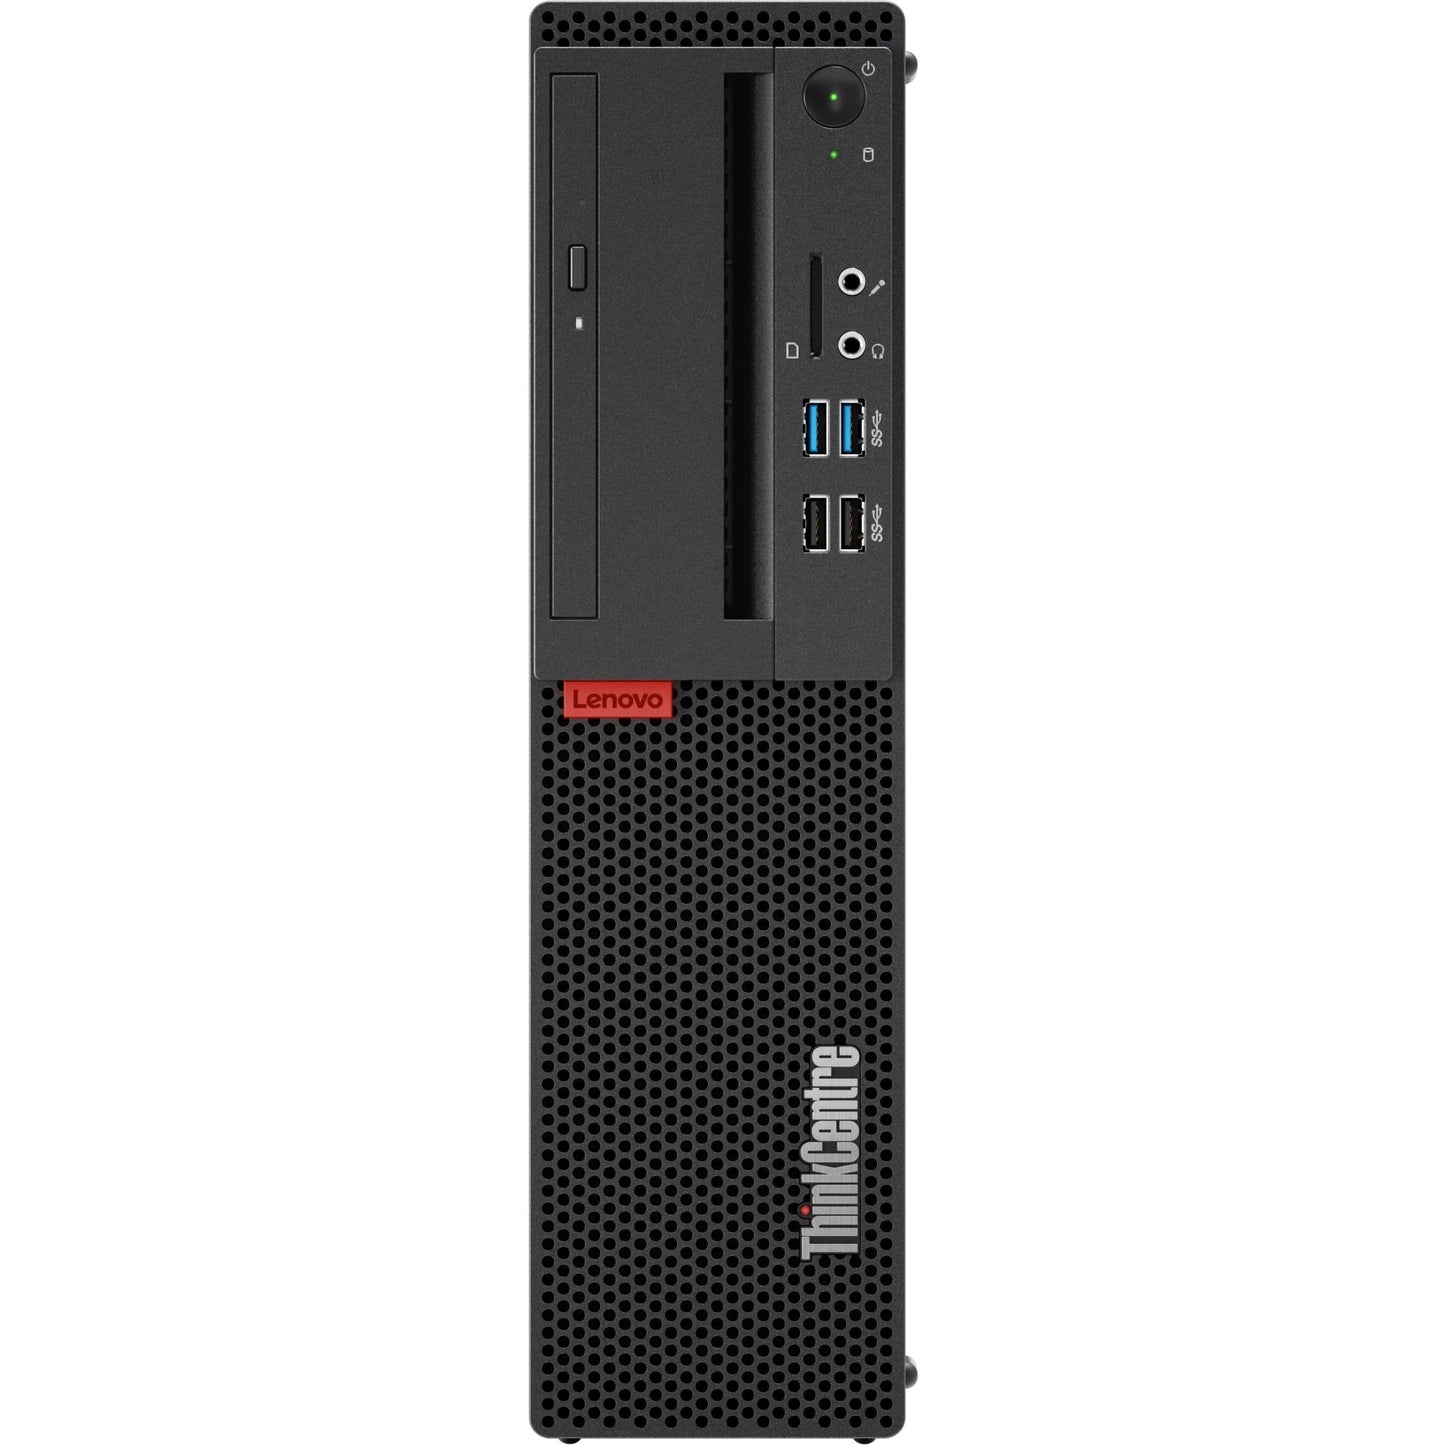 Lenovo ThinkCentre M725s 10VUS13Q00 Desktop Computer - AMD Ryzen 3 2200G 3.50 GHz - 8 GB RAM DDR4 SDRAM - 256 GB SSD - Small Form Factor